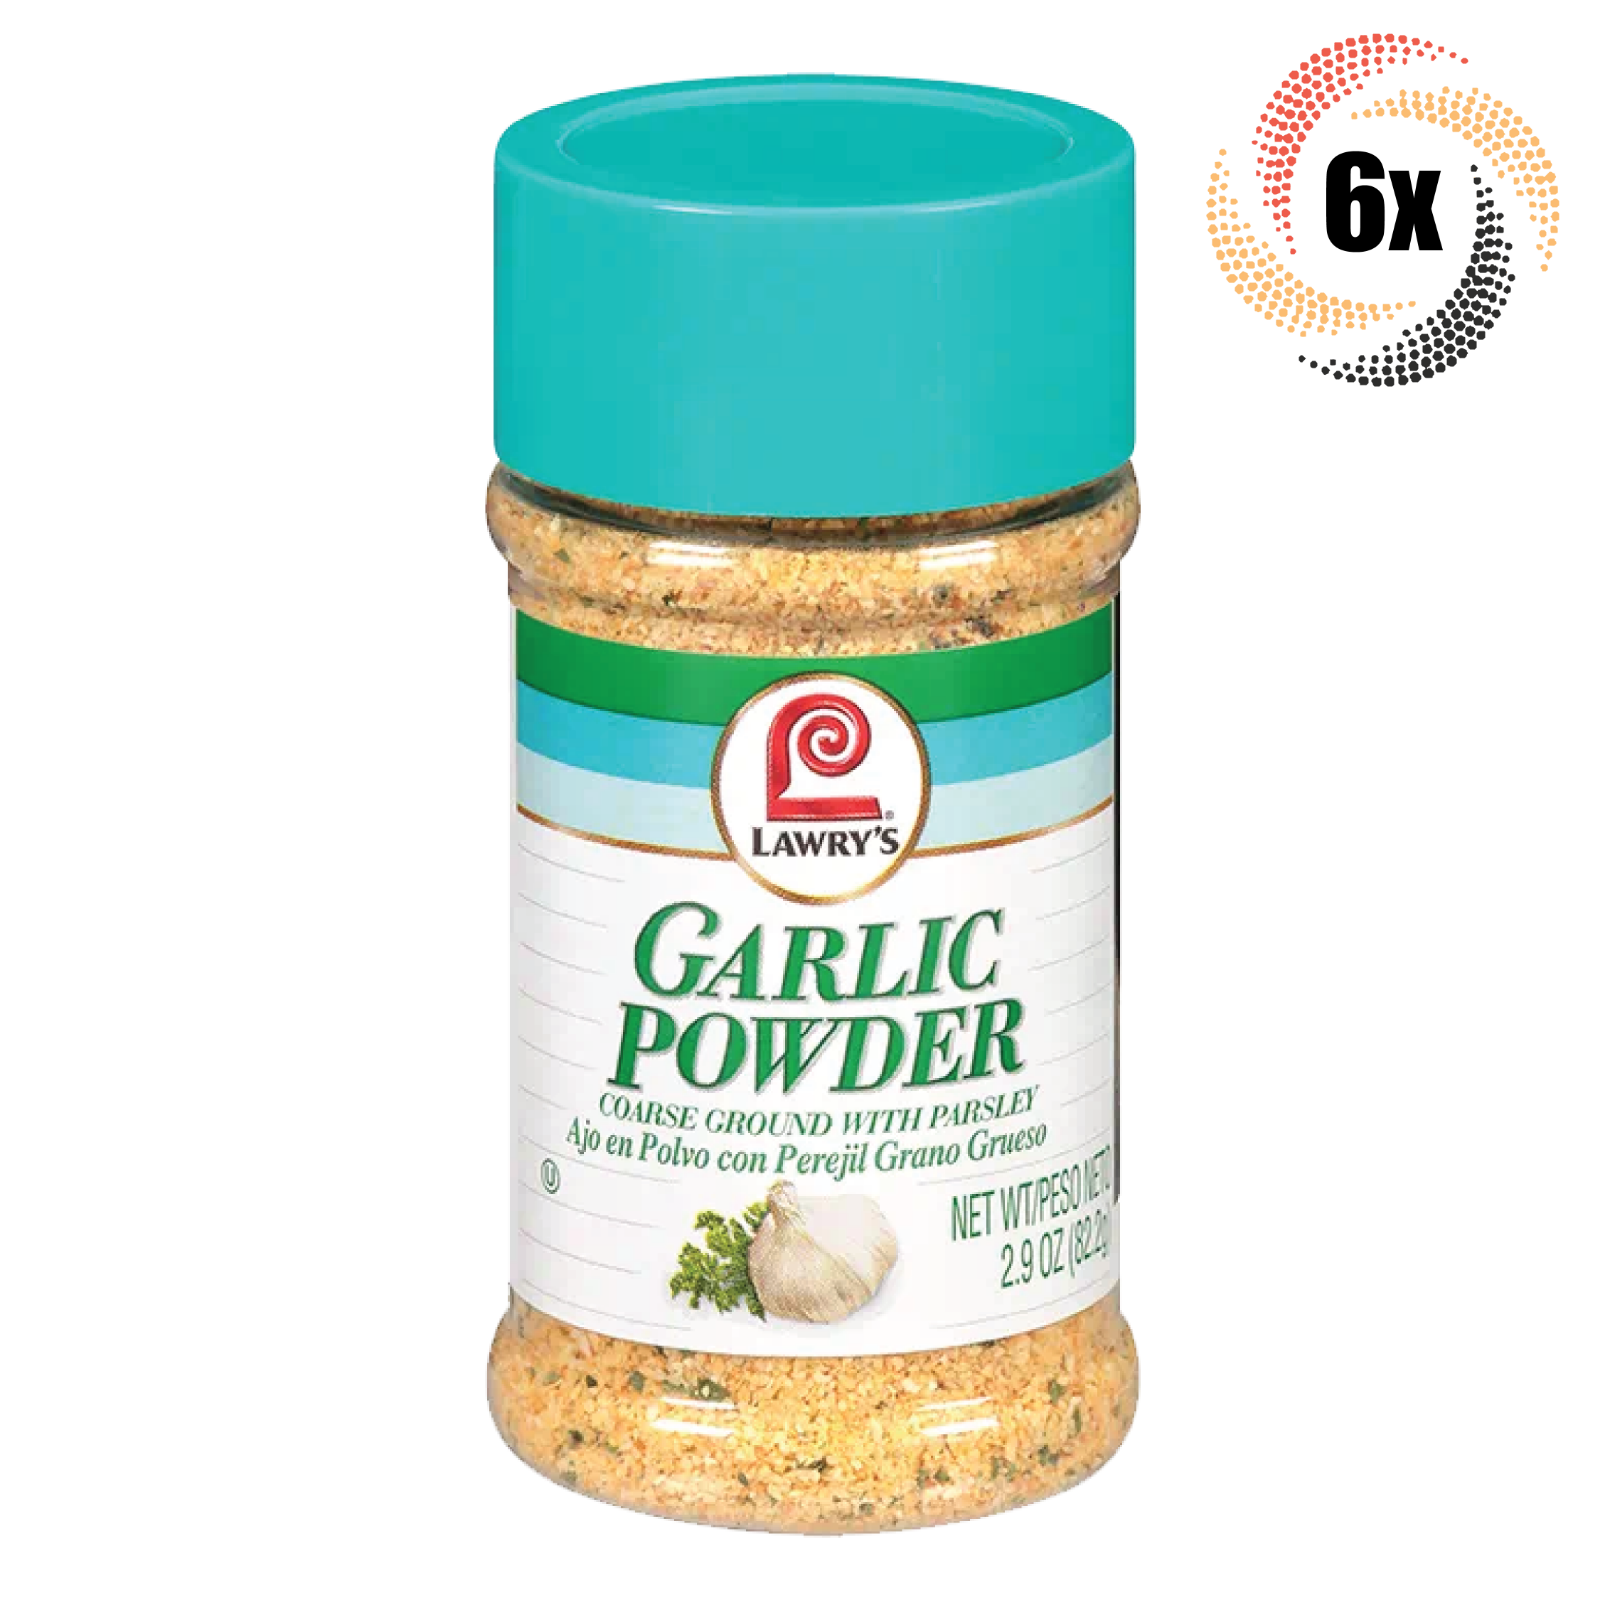 6x Shakers Lawry's Garlic Powder Seasoning | Coarse Ground Blend Parsley | 2.9oz - $54.13